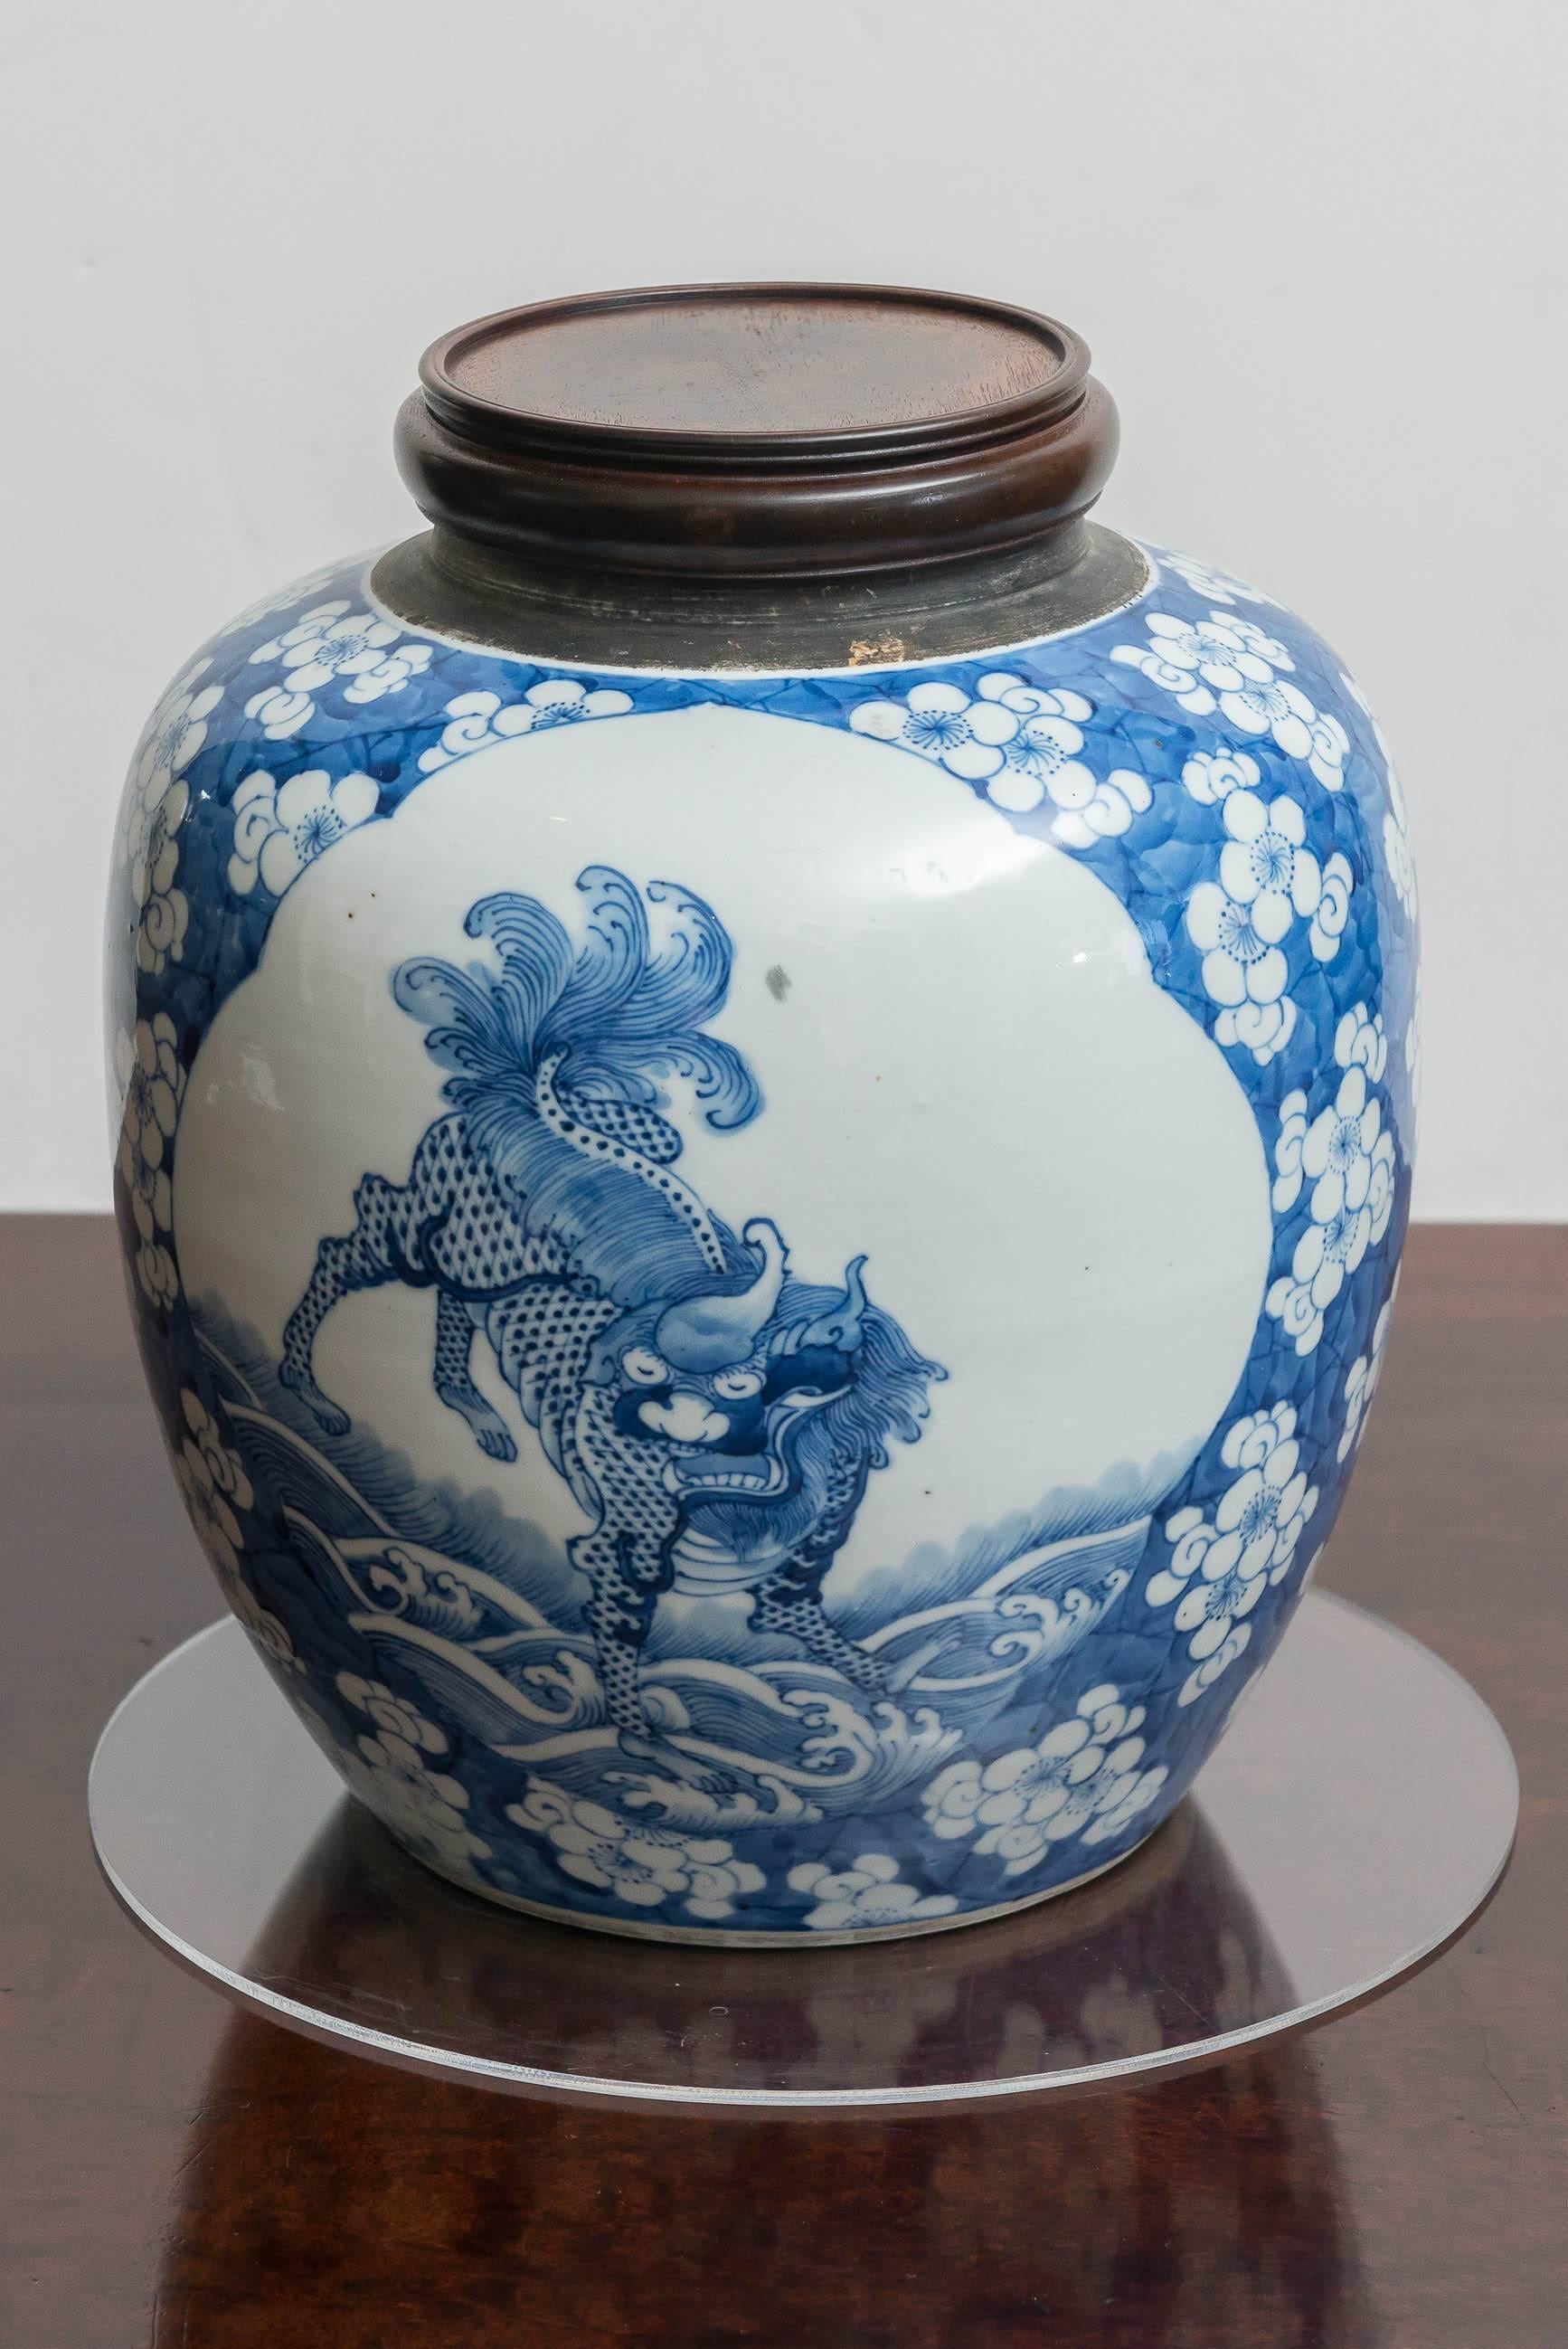 K'ang Hsi style blue and white jar, circa 1880. Measure: 9.5